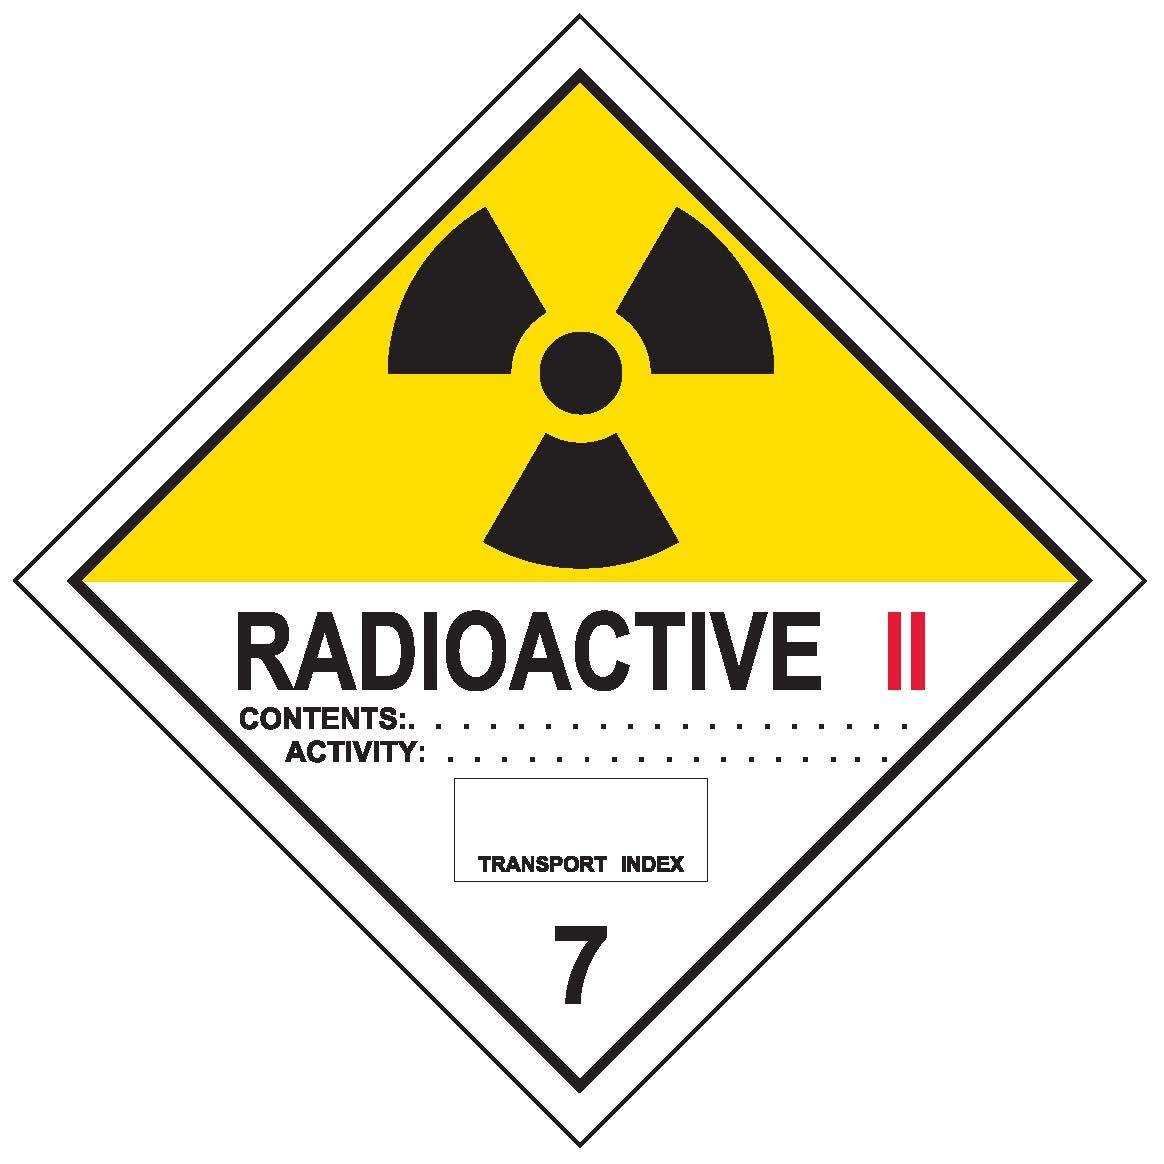 Radioactive 11 Class 7